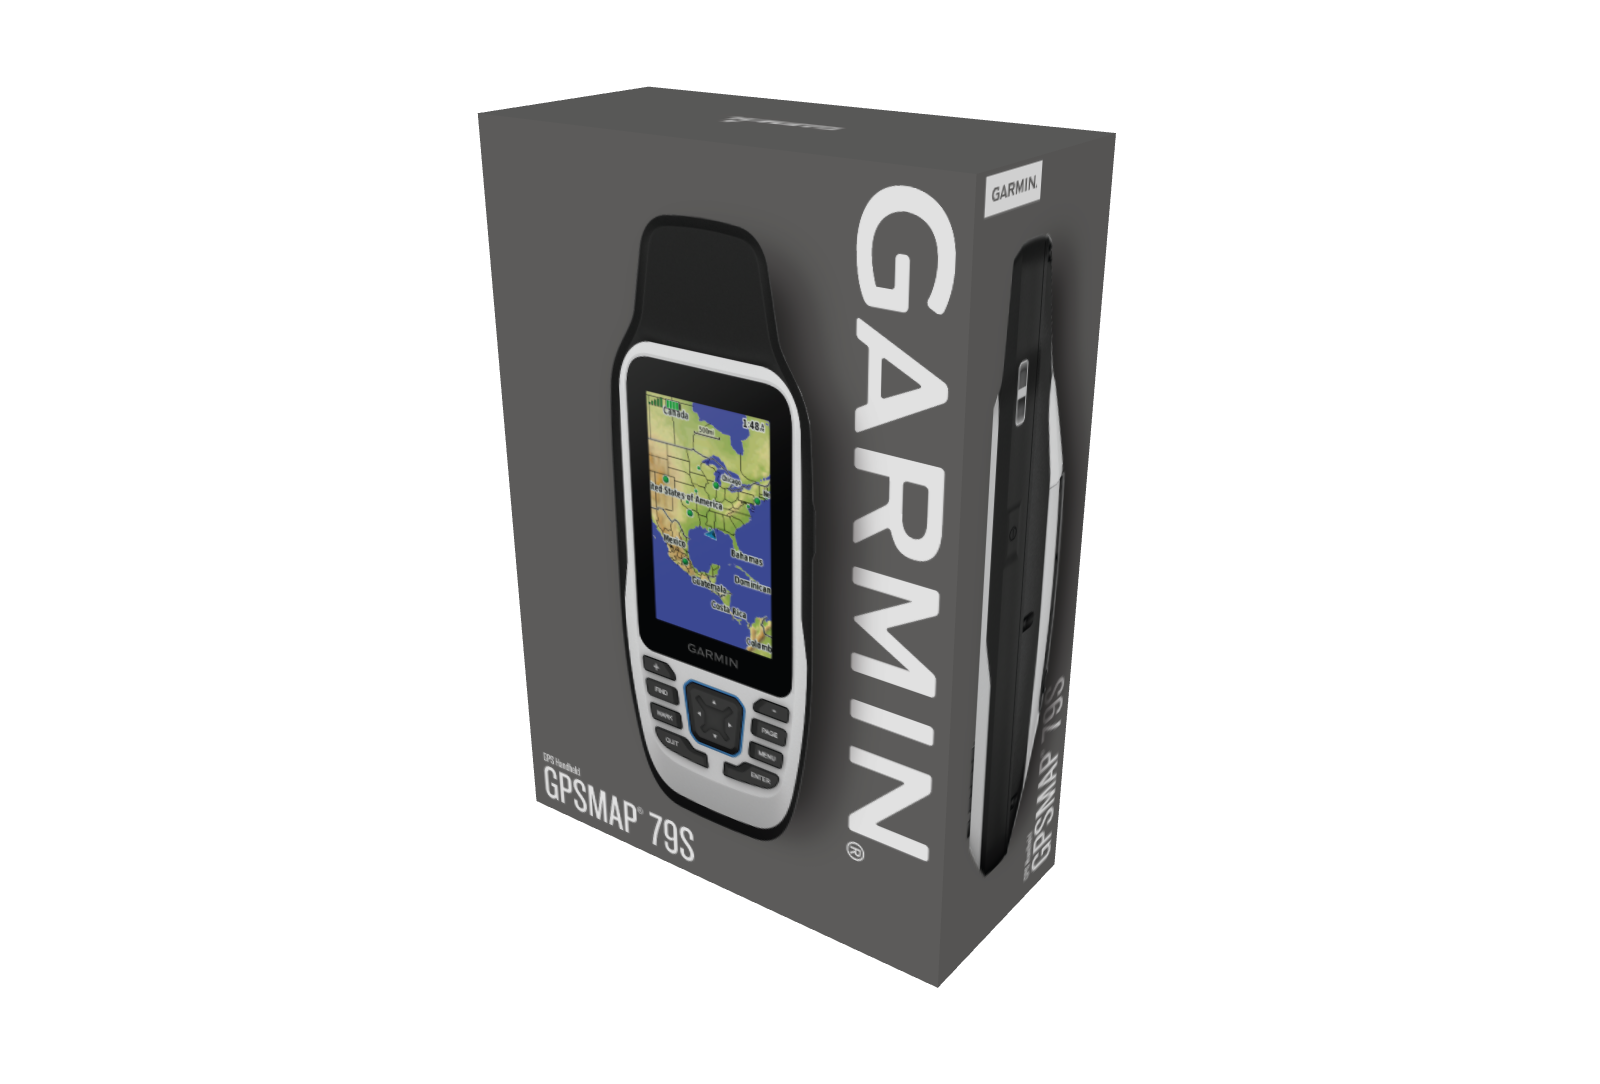 Garmin GPSMAP 79s Marine GPS portable